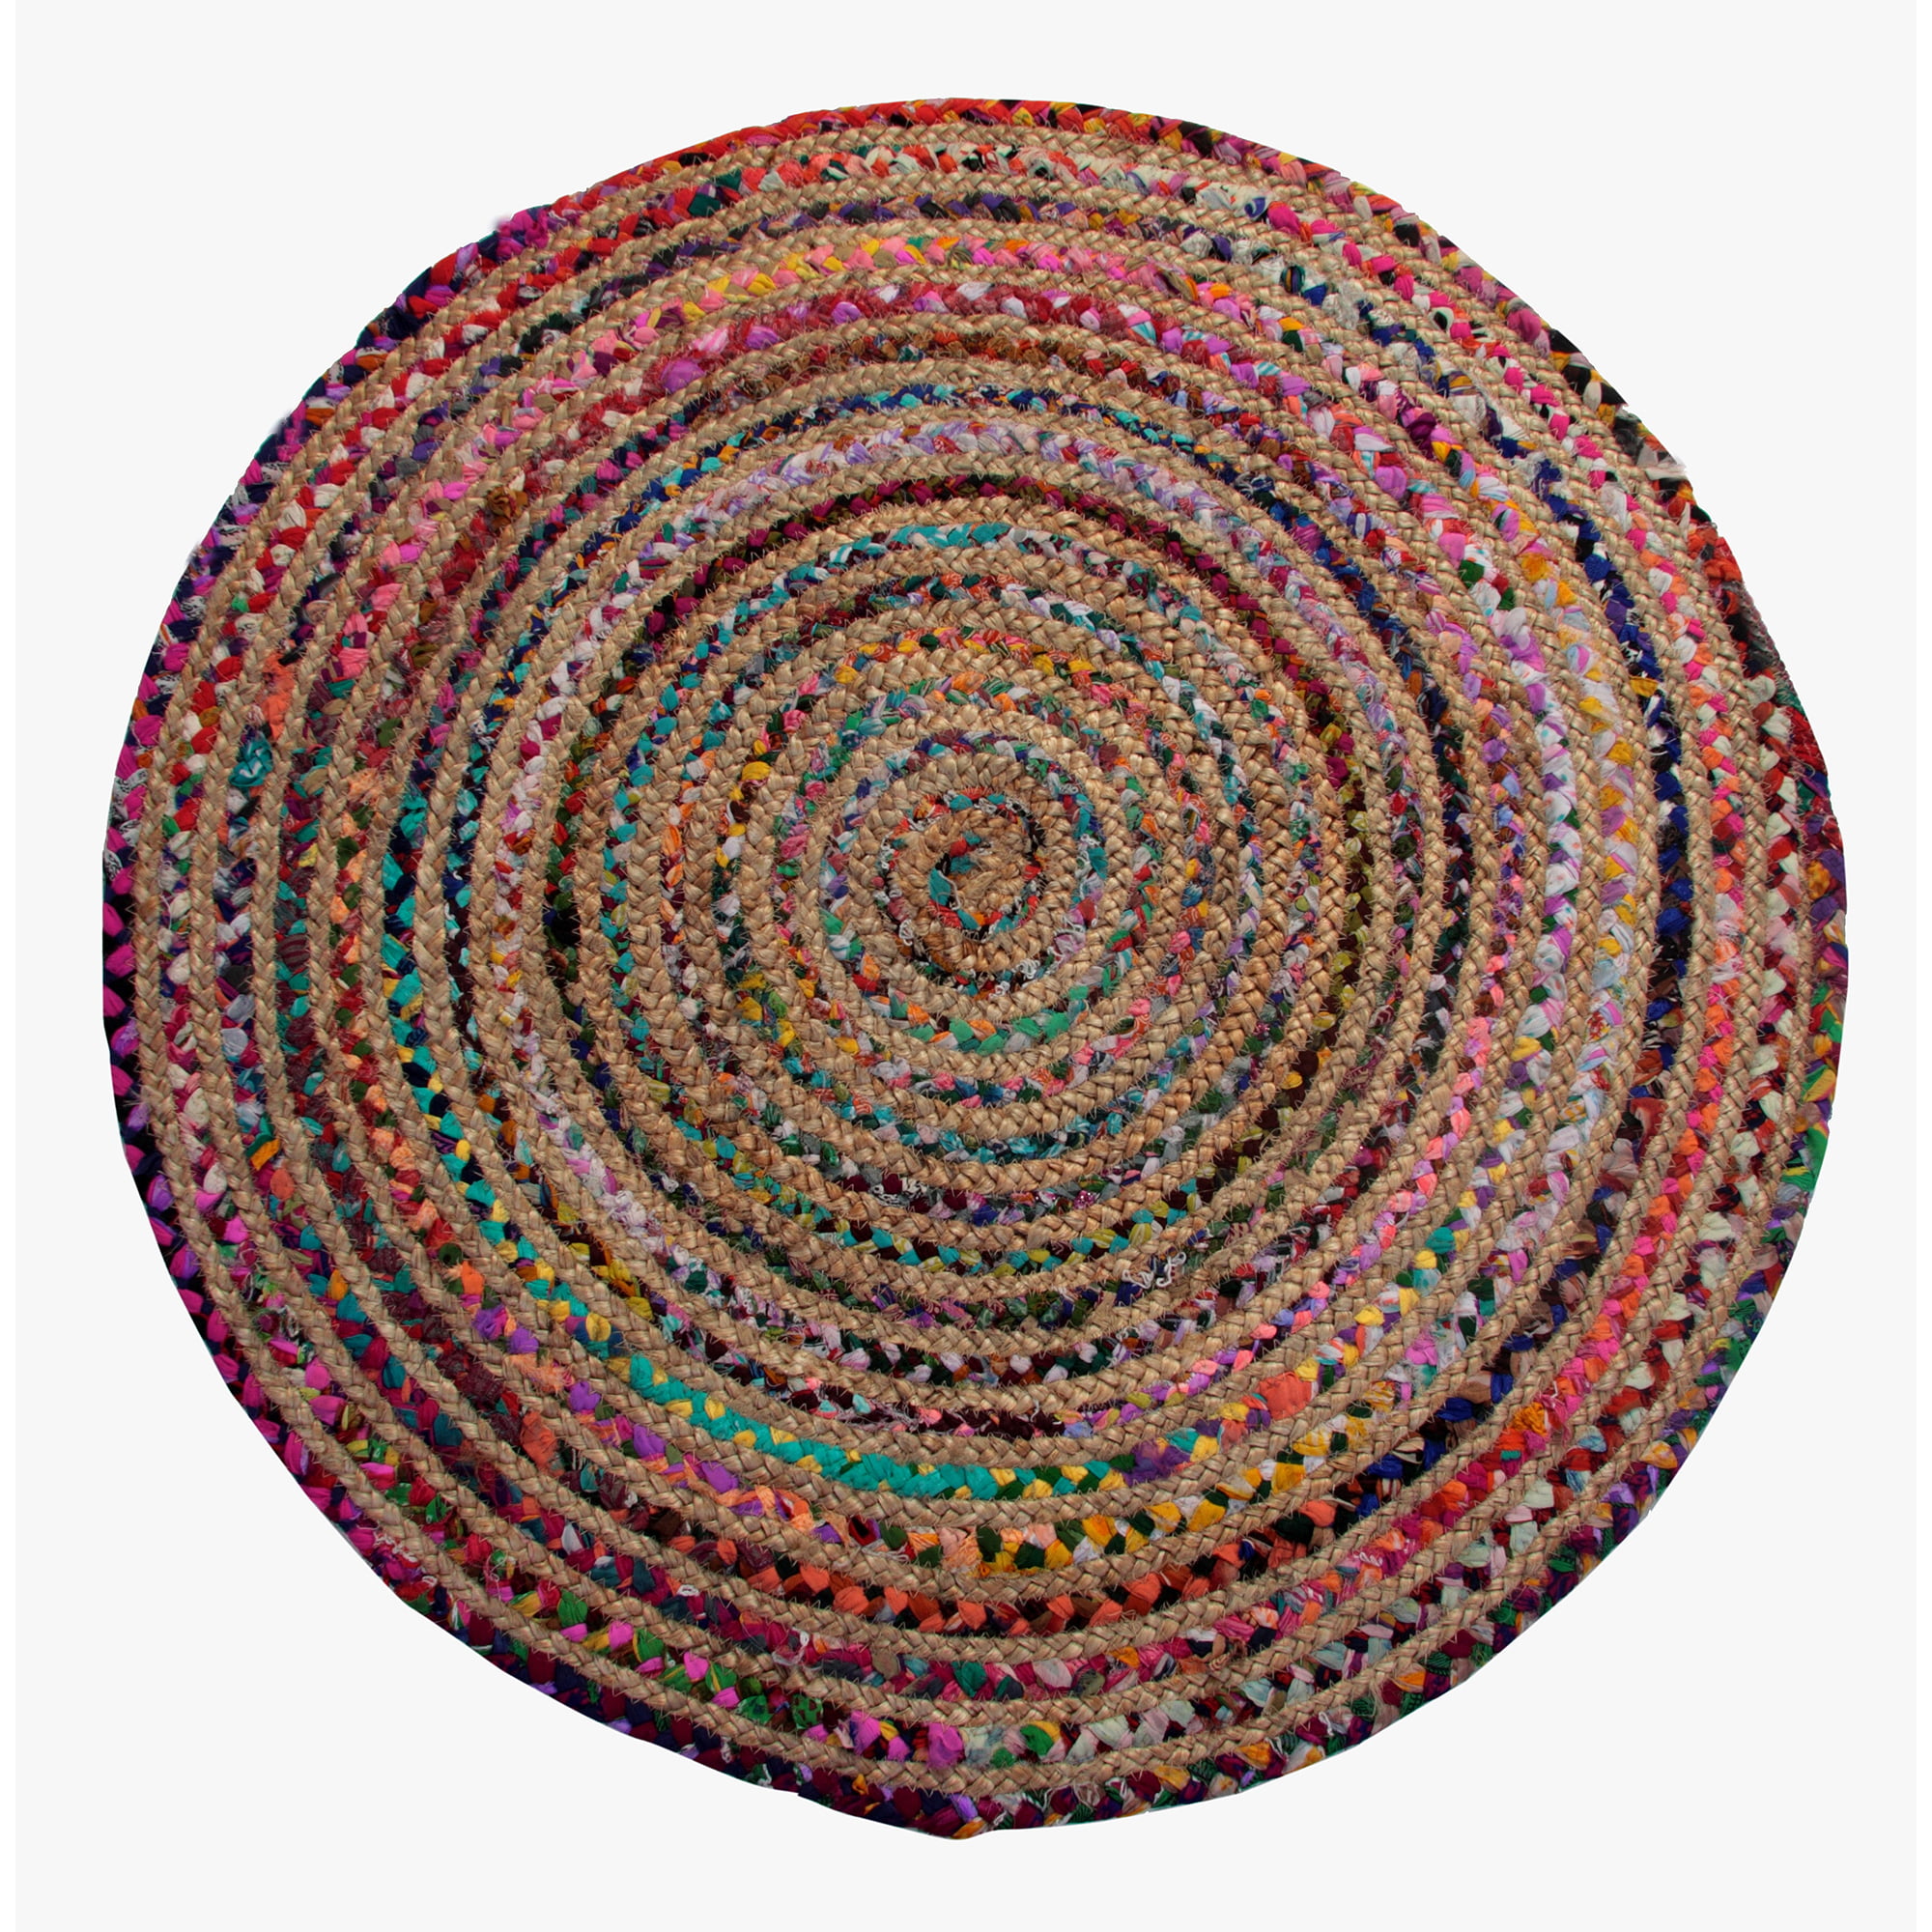 Astoria Natural Hemp and Dyed Chindi Braided Round Rug, Multi-Color, 3u0027